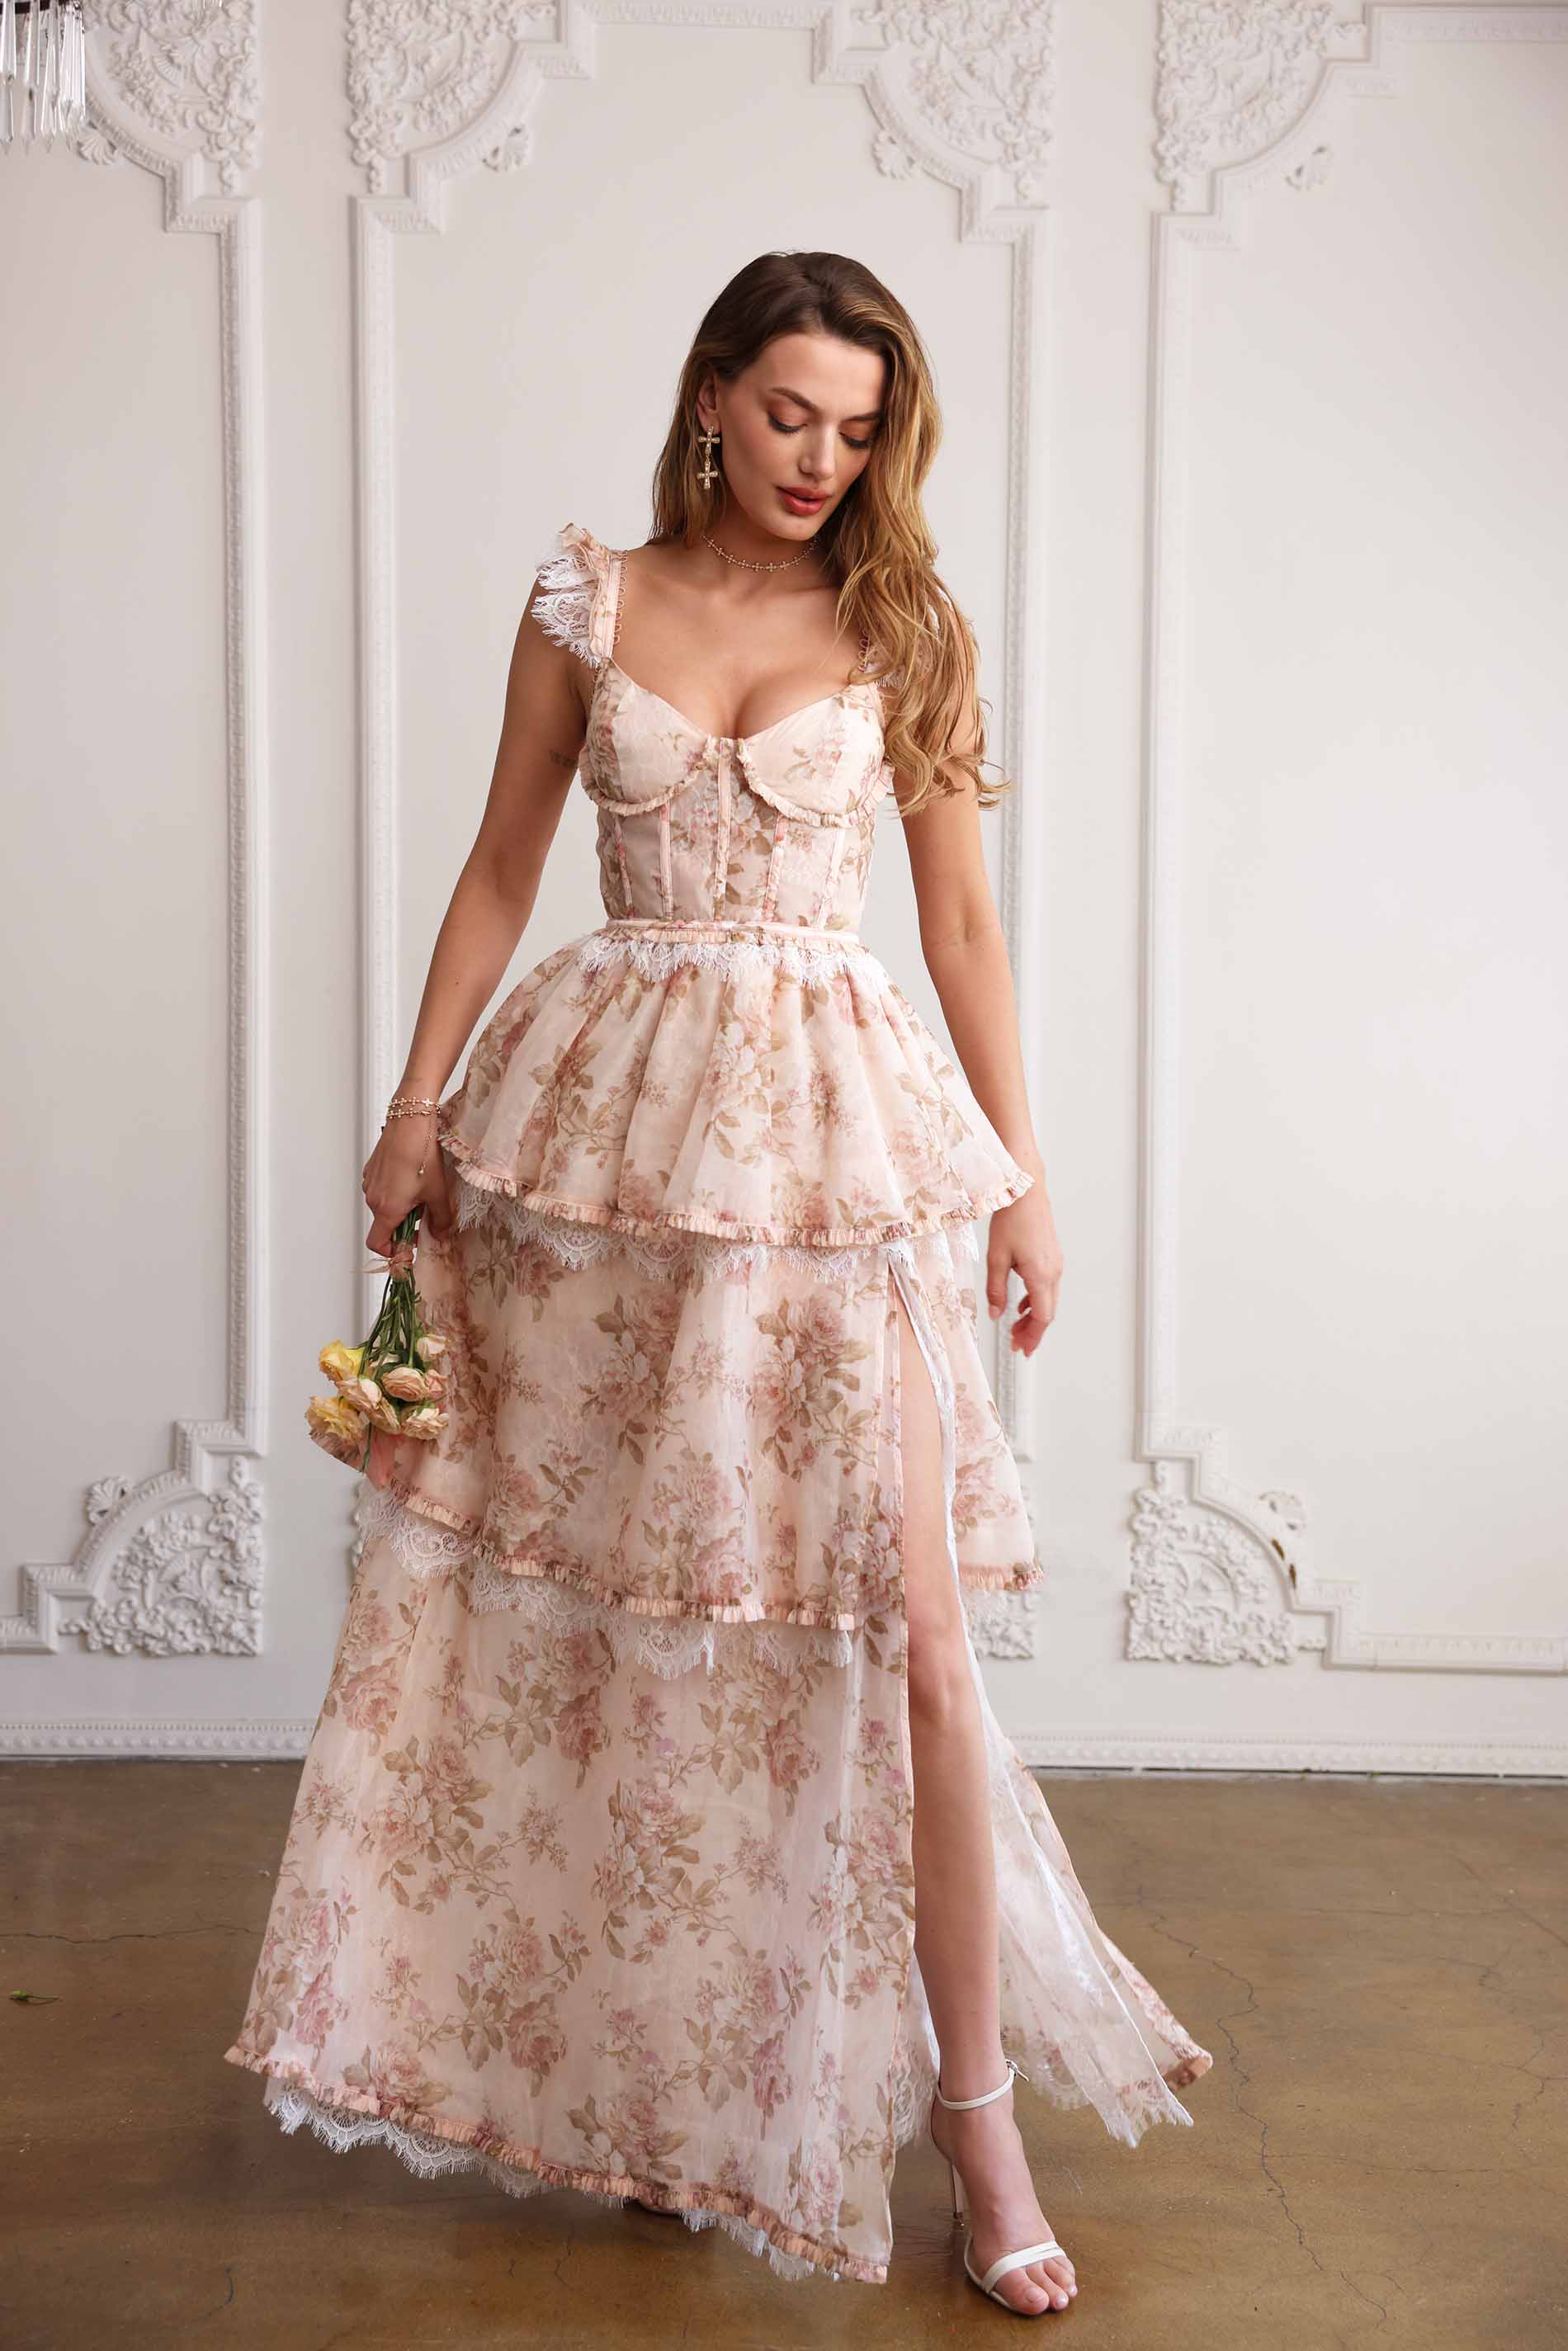 Dressing Floral 3588 - La Jolie Madame